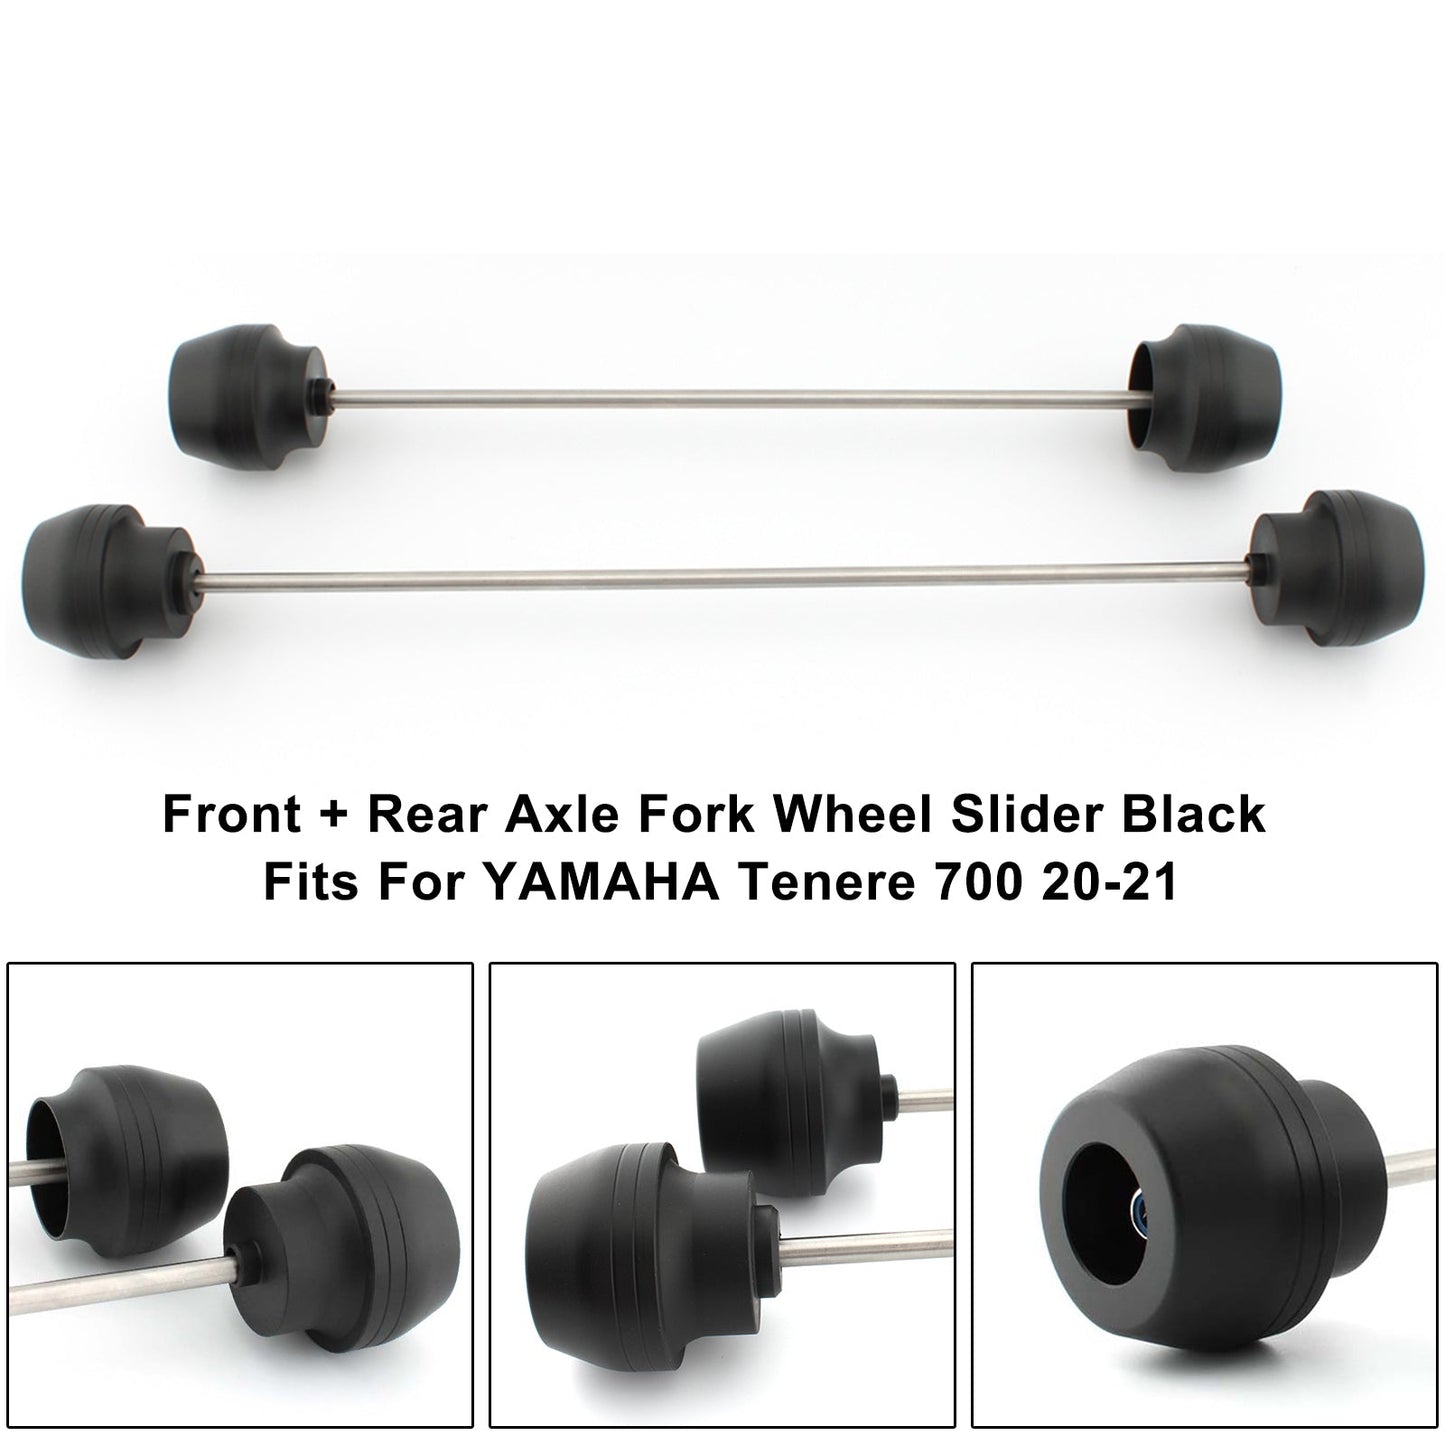 Front + Rear Axle Fork Wheel Slider Cnc Black Fits For Yamaha Tenere 700 20-21